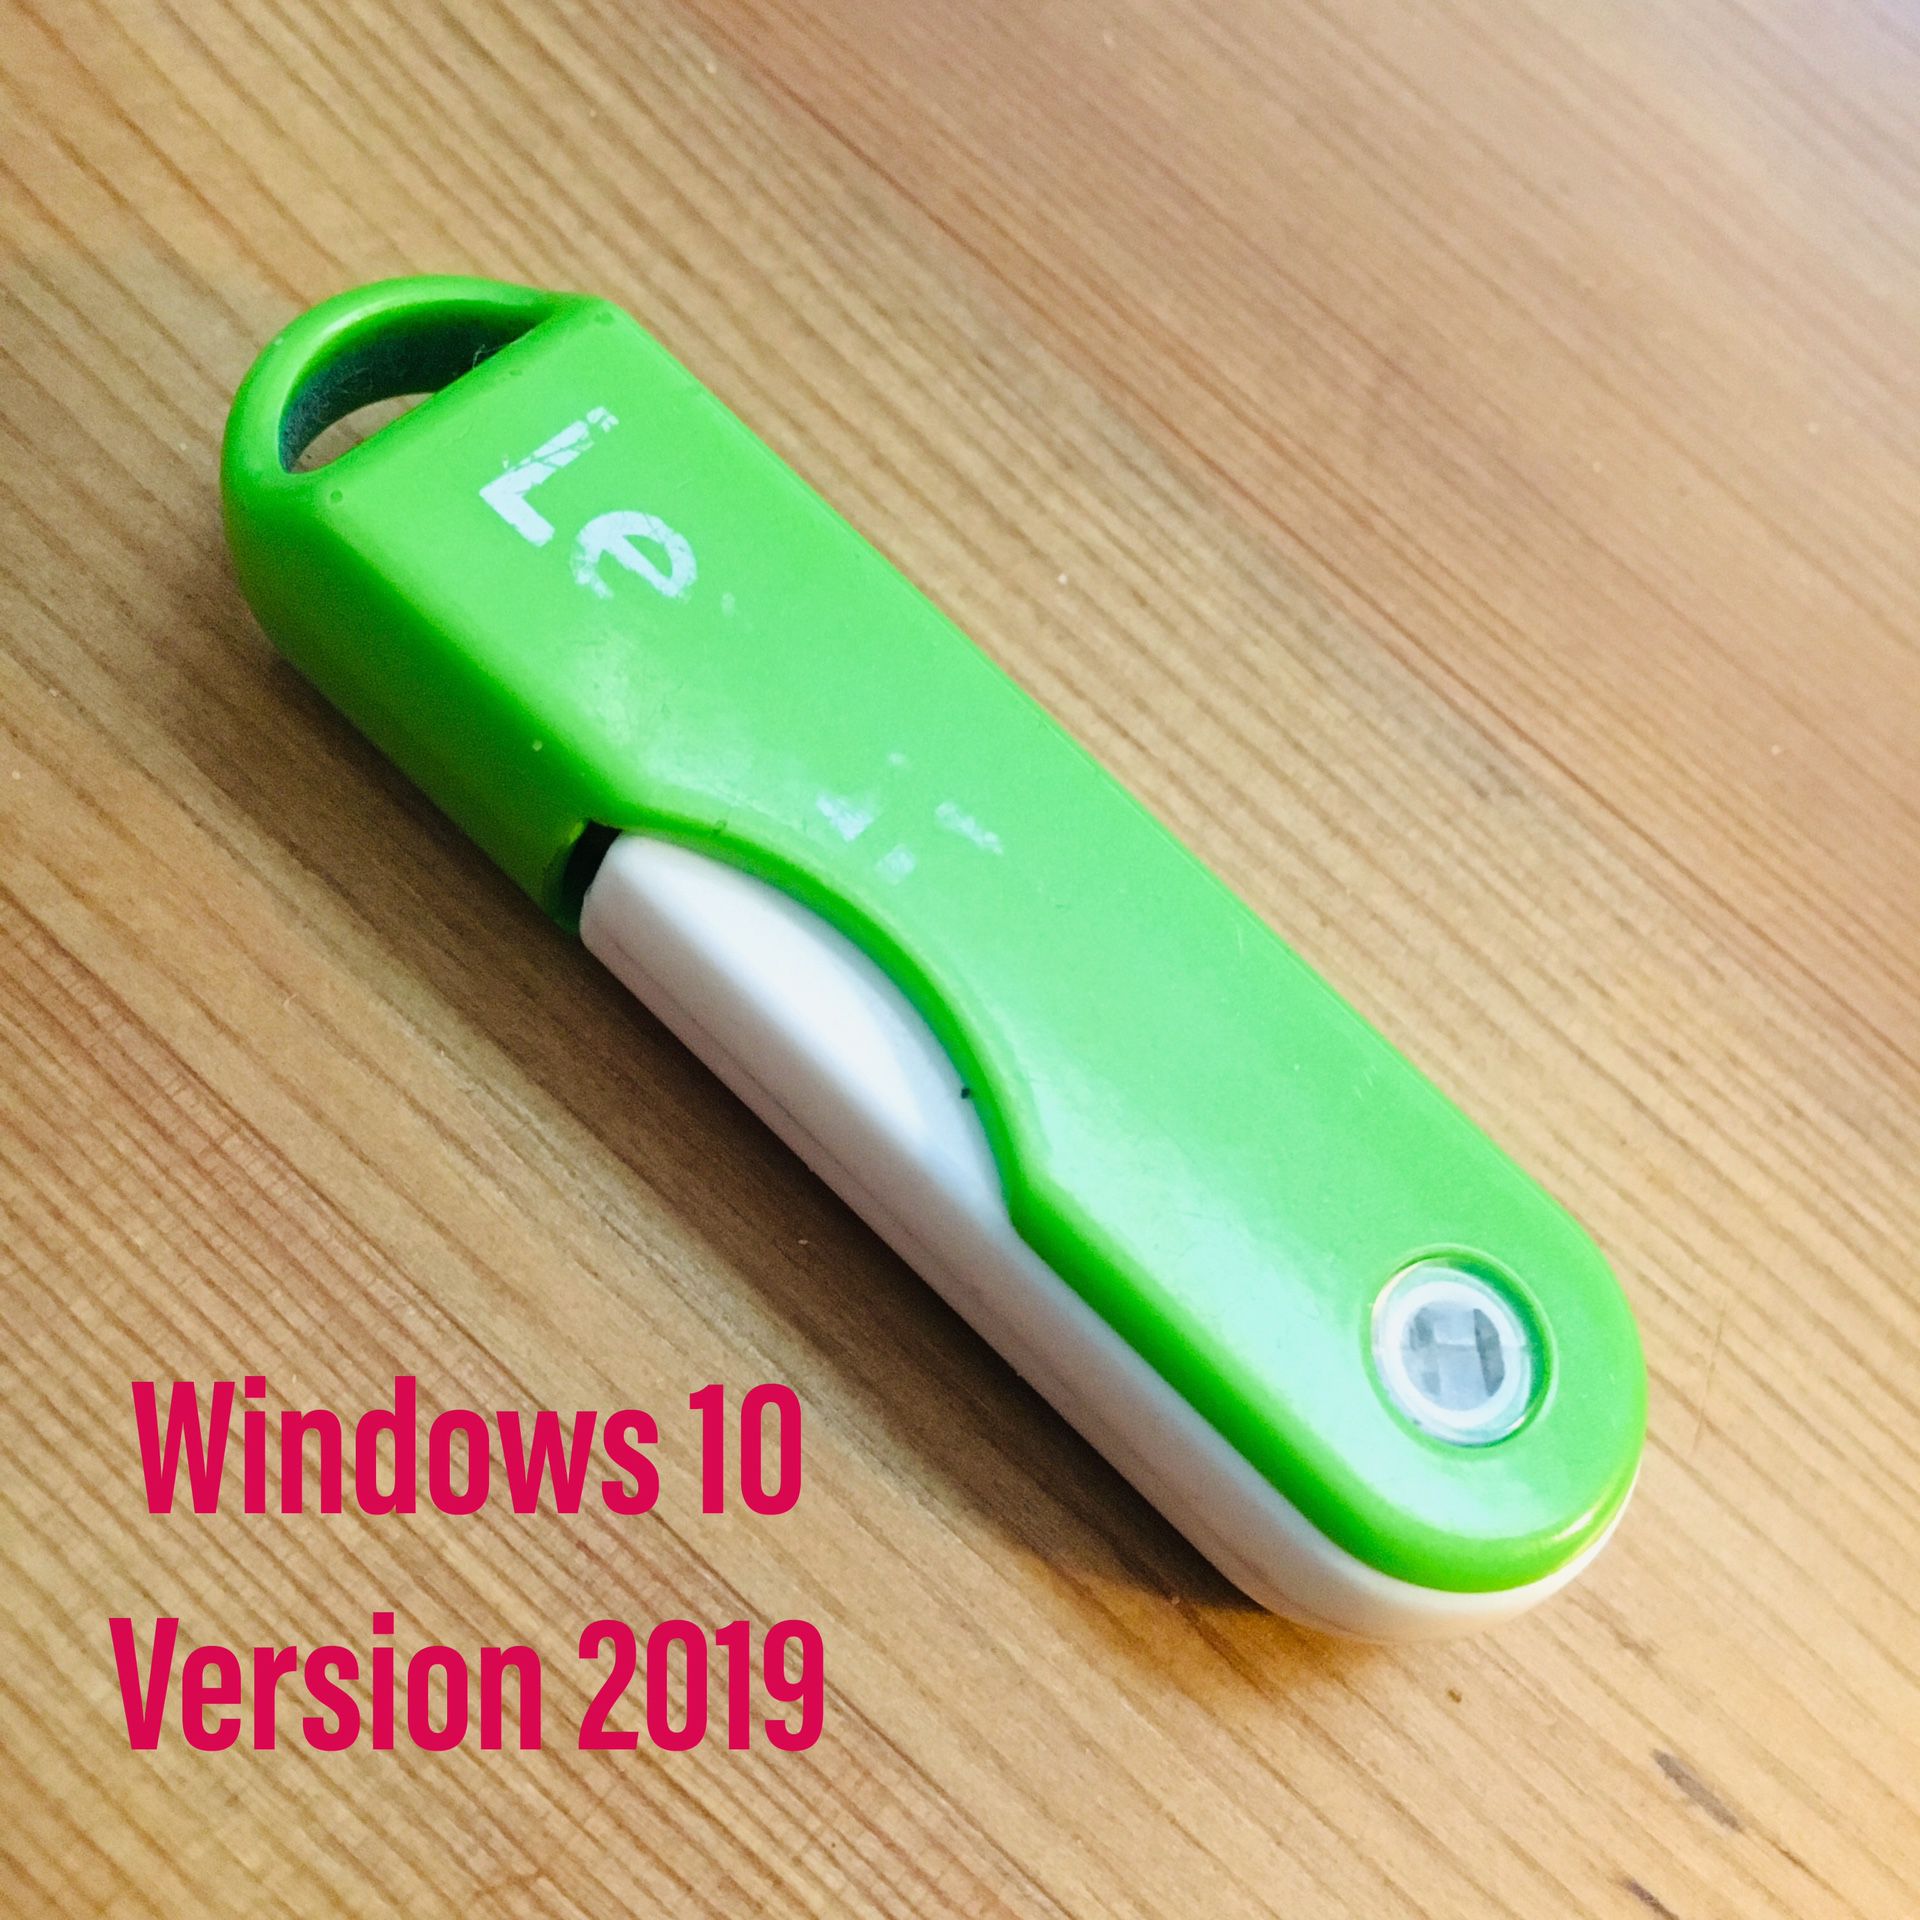 Windows 10 setup flash drive version 2019